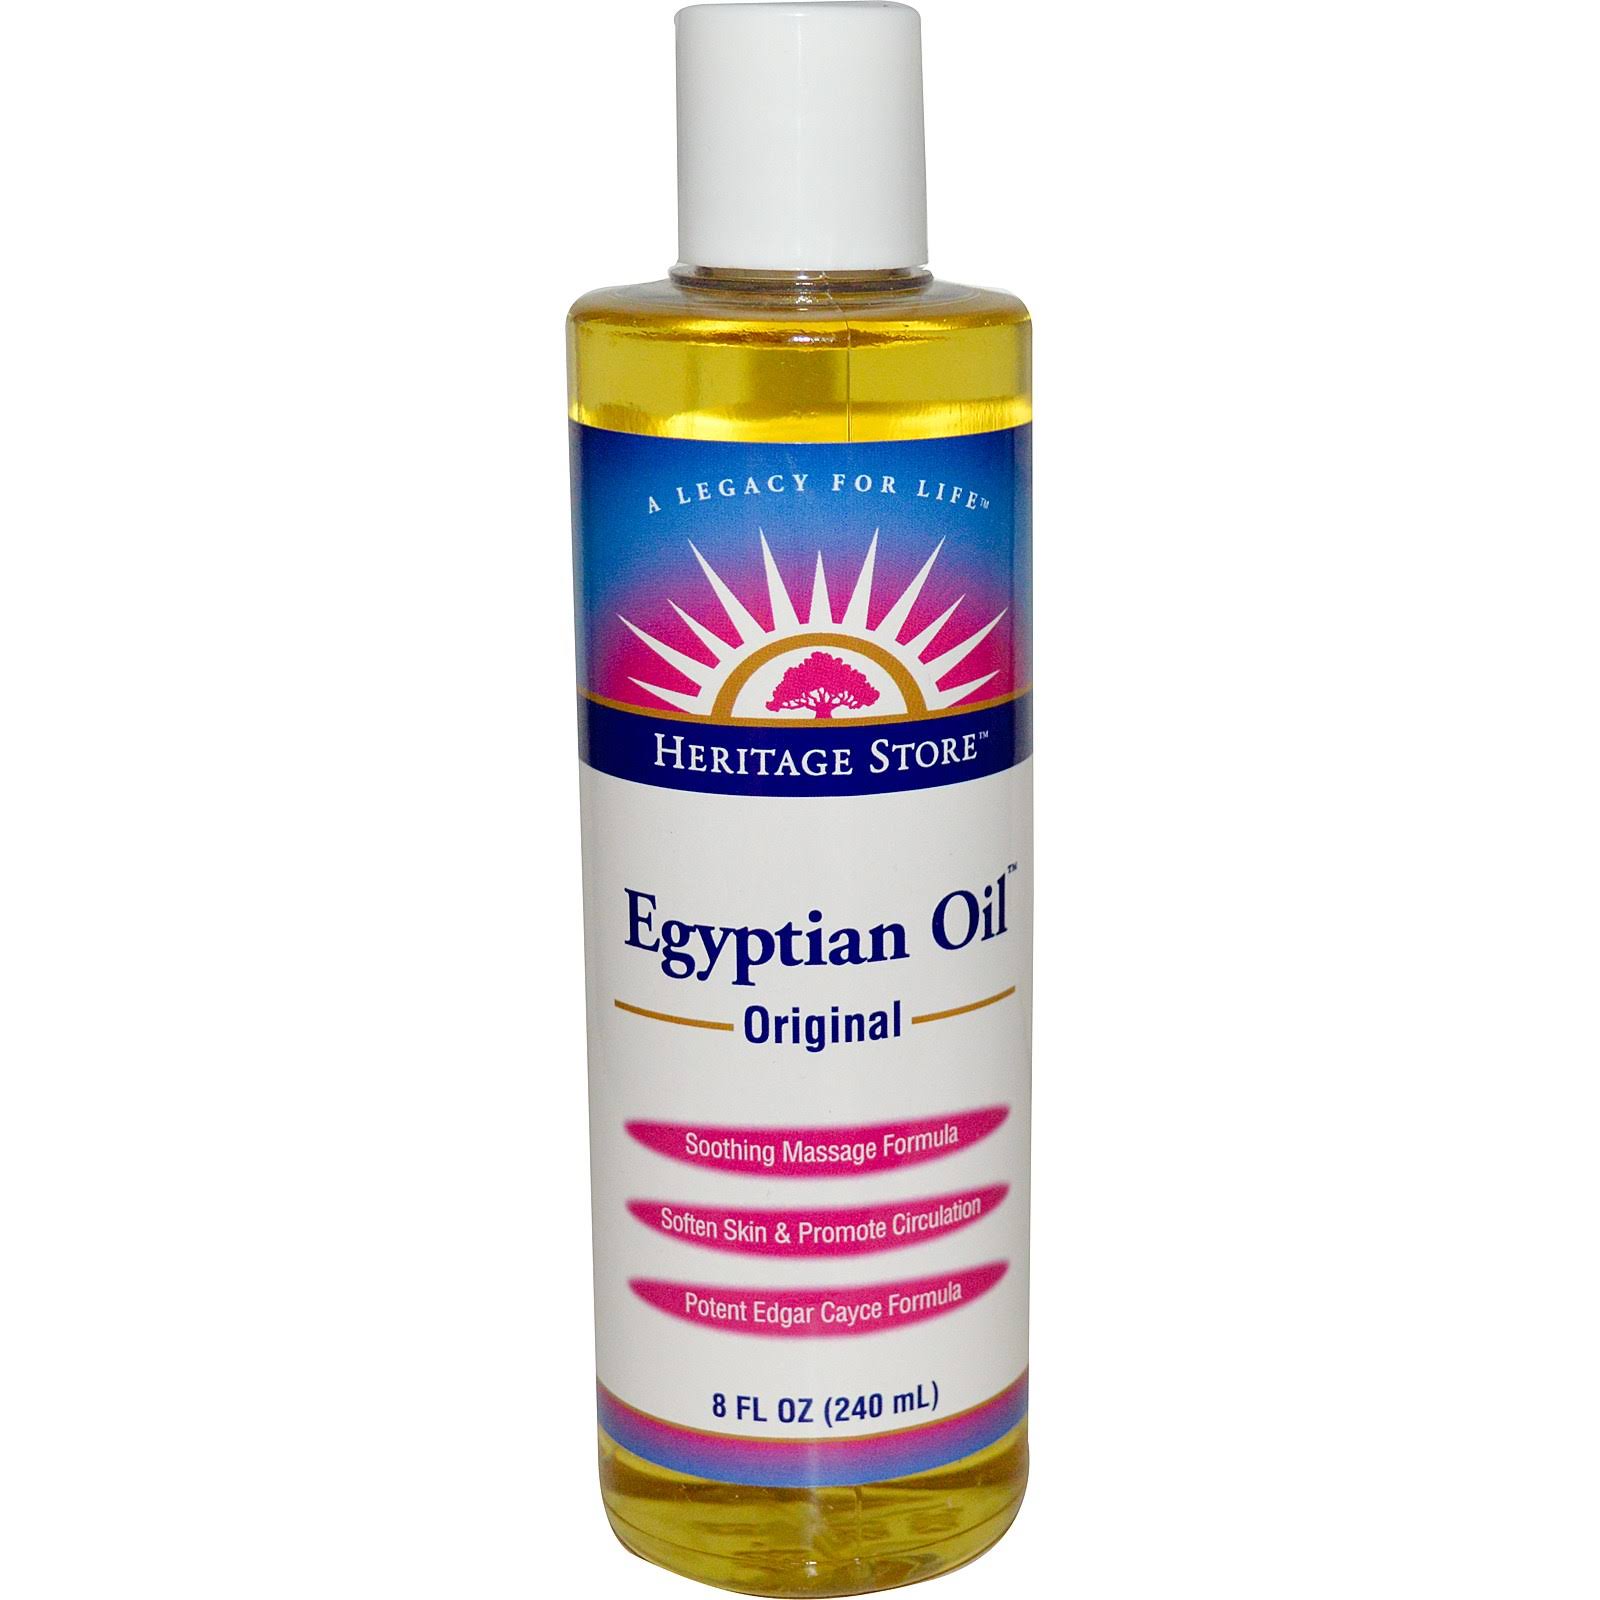 Heritage Store Egyptian Oil Original 8 fl oz (240 ml)